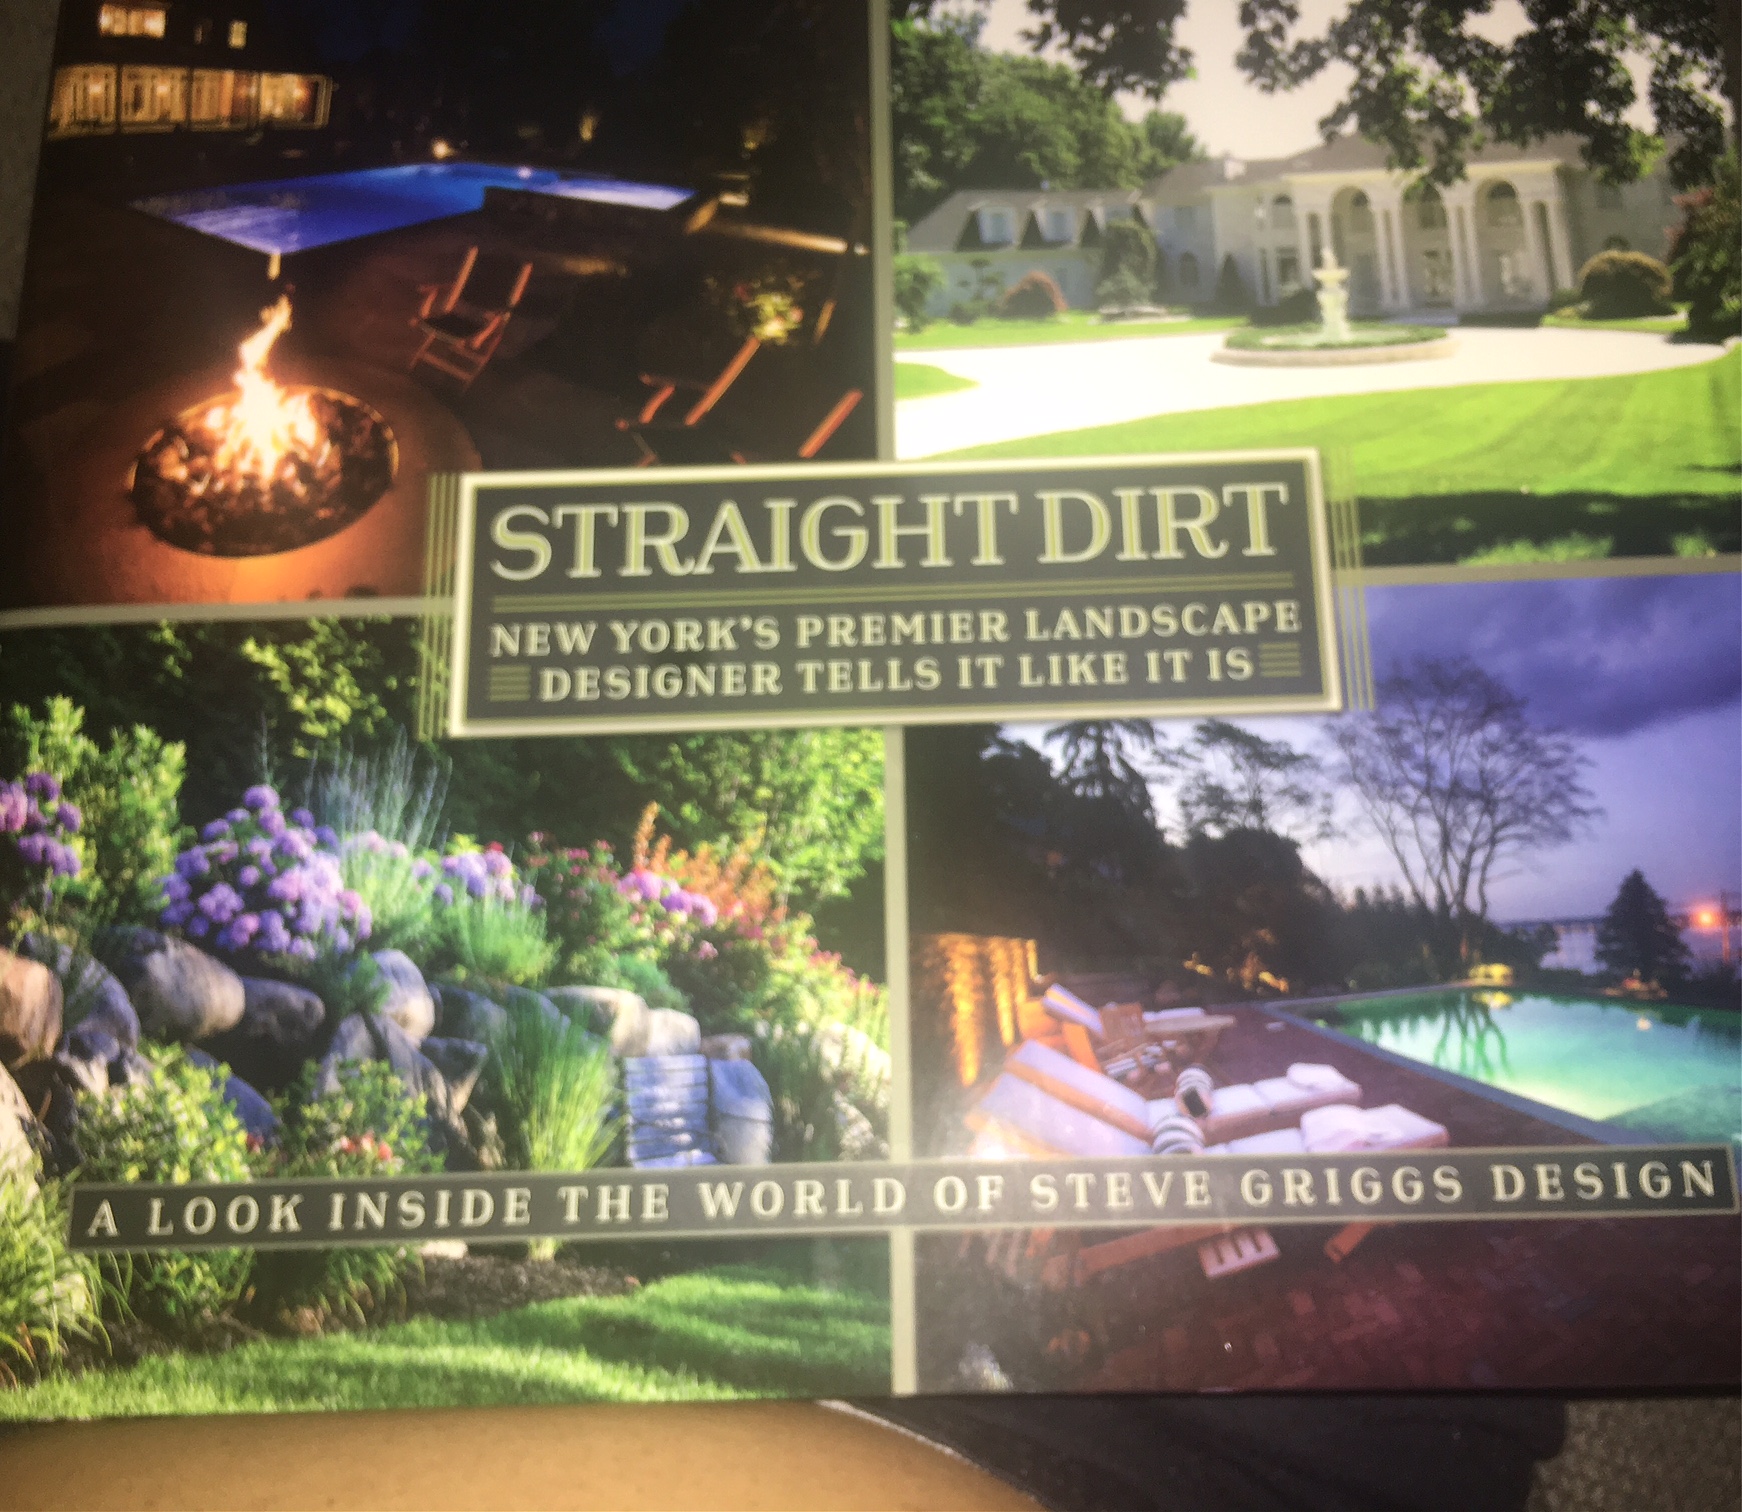 Hardcover of Steve Griggs' book Straight Dirt New York's Premier Landscape Designer Tells It Like It Is. A Look Inside The World of Steve Griggs Design.